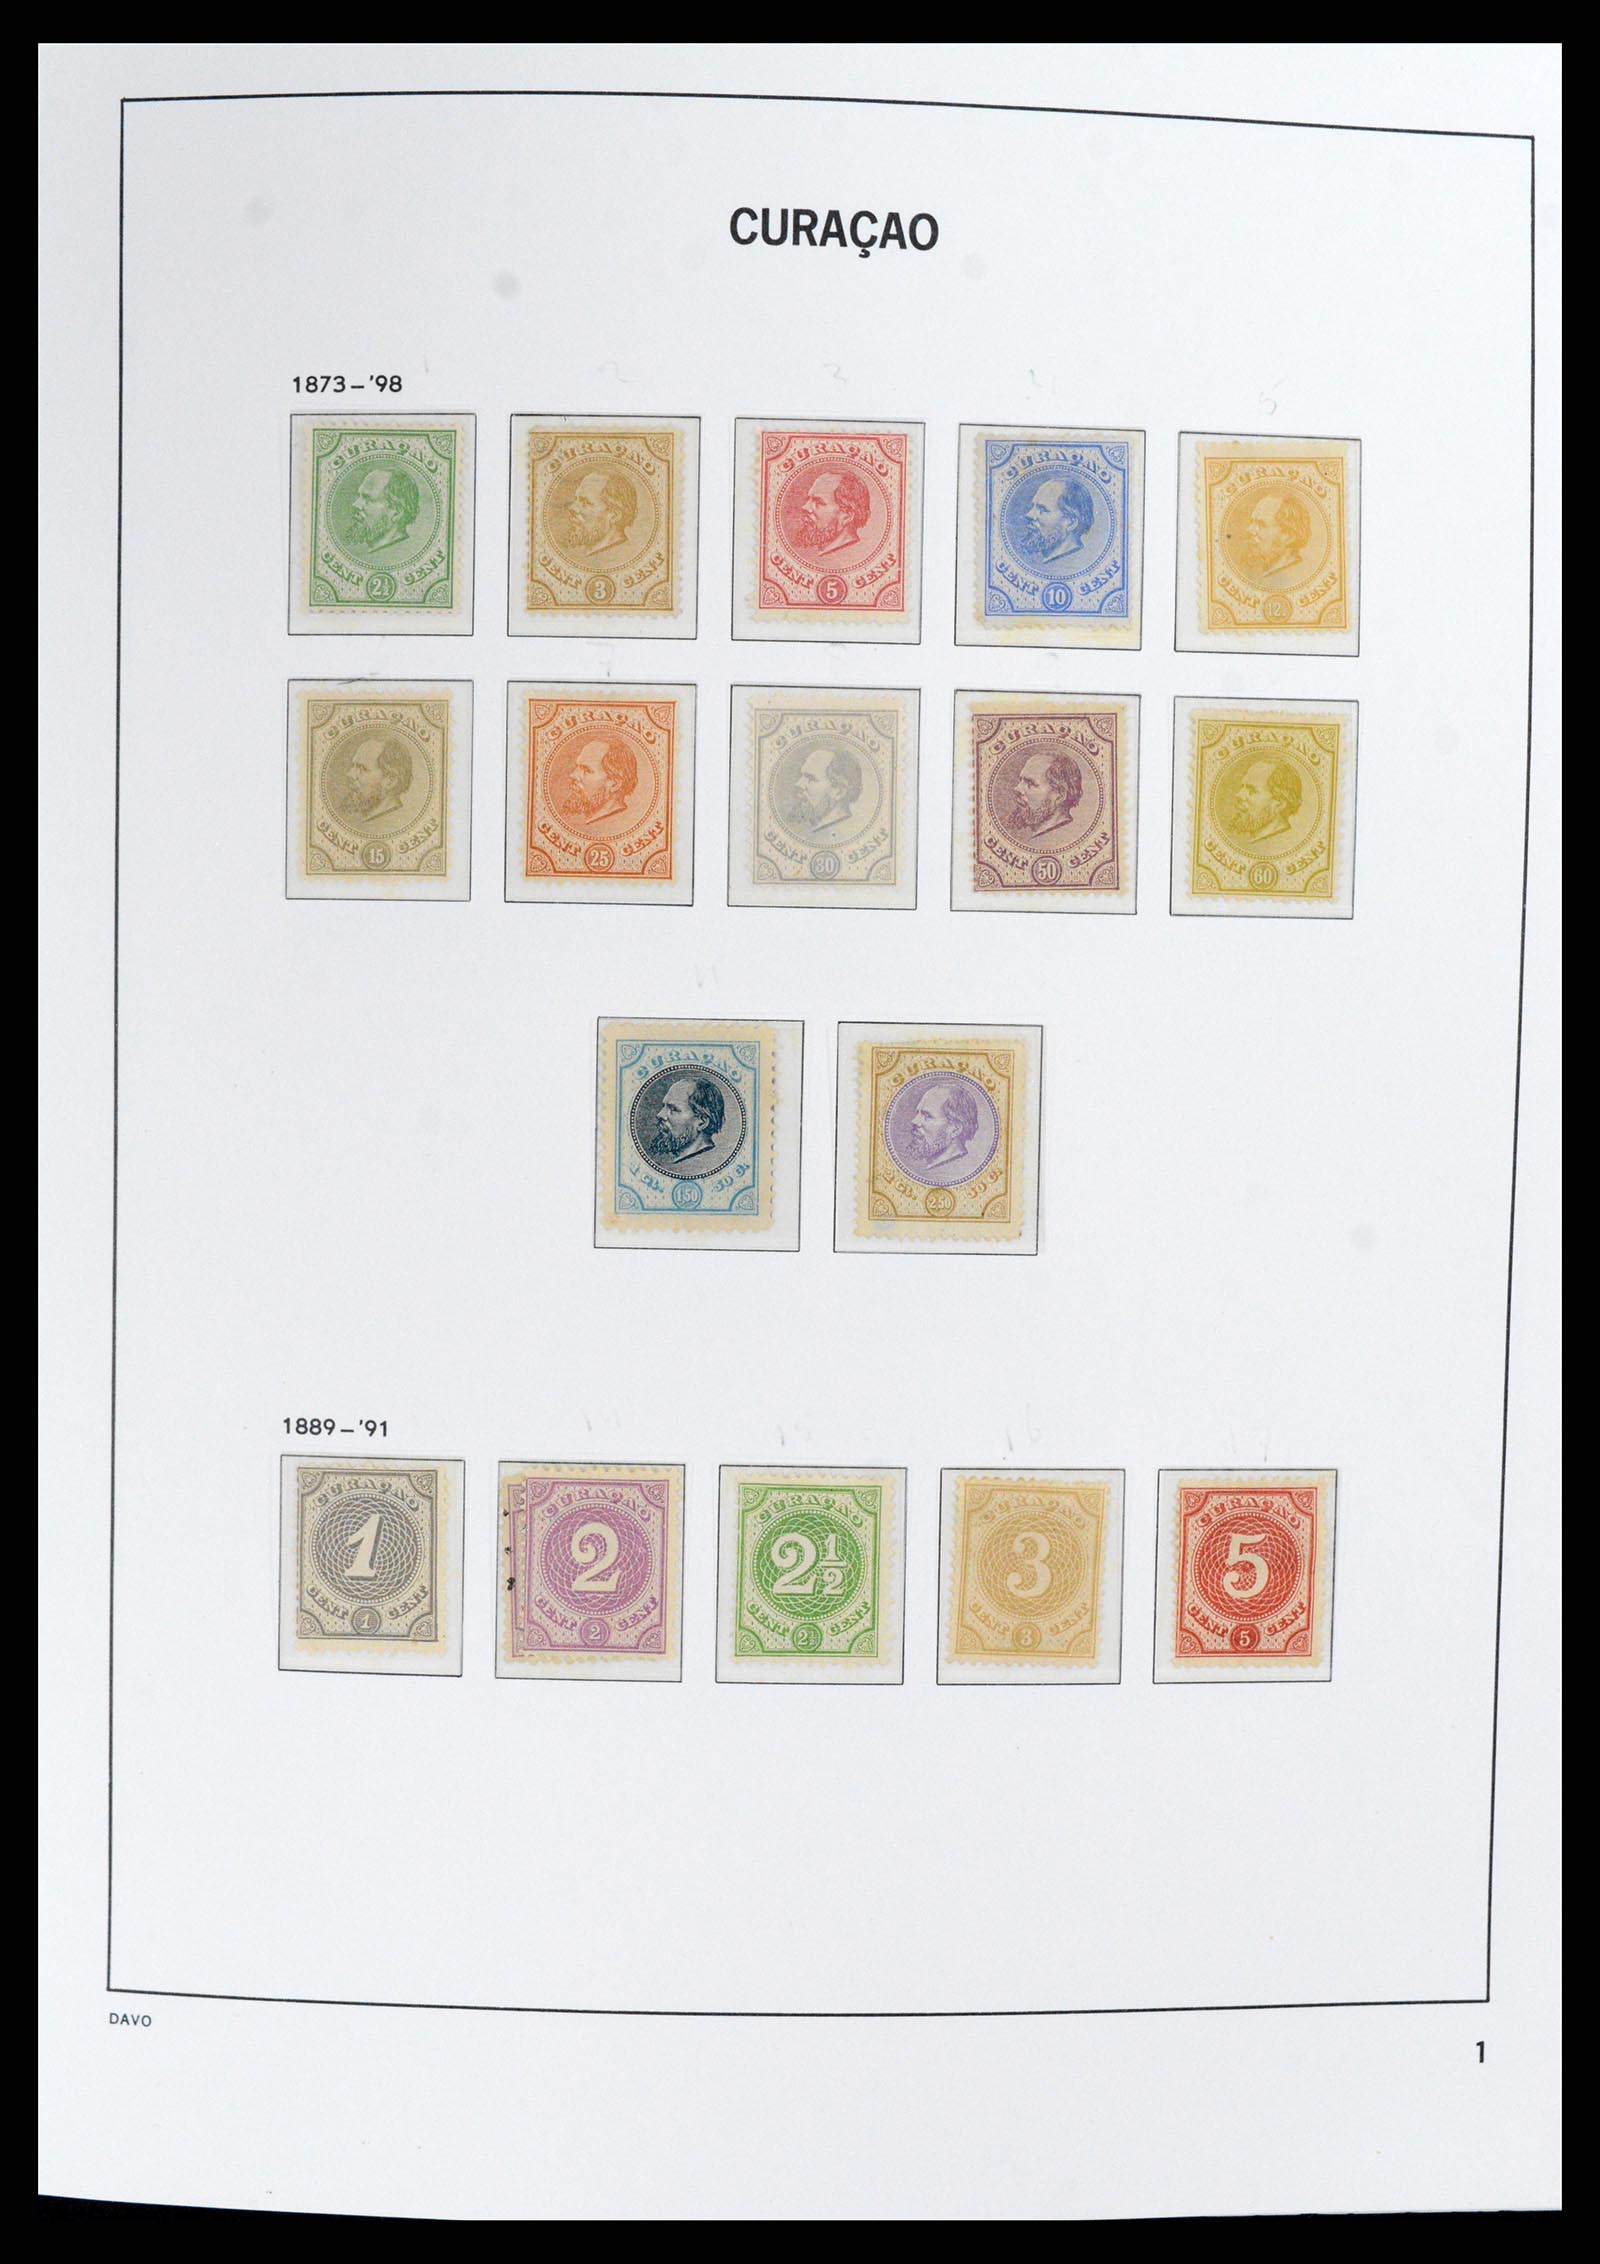 37844 001 - Stamp Collection 37844 Curaçao/Antilles 1873-2010.